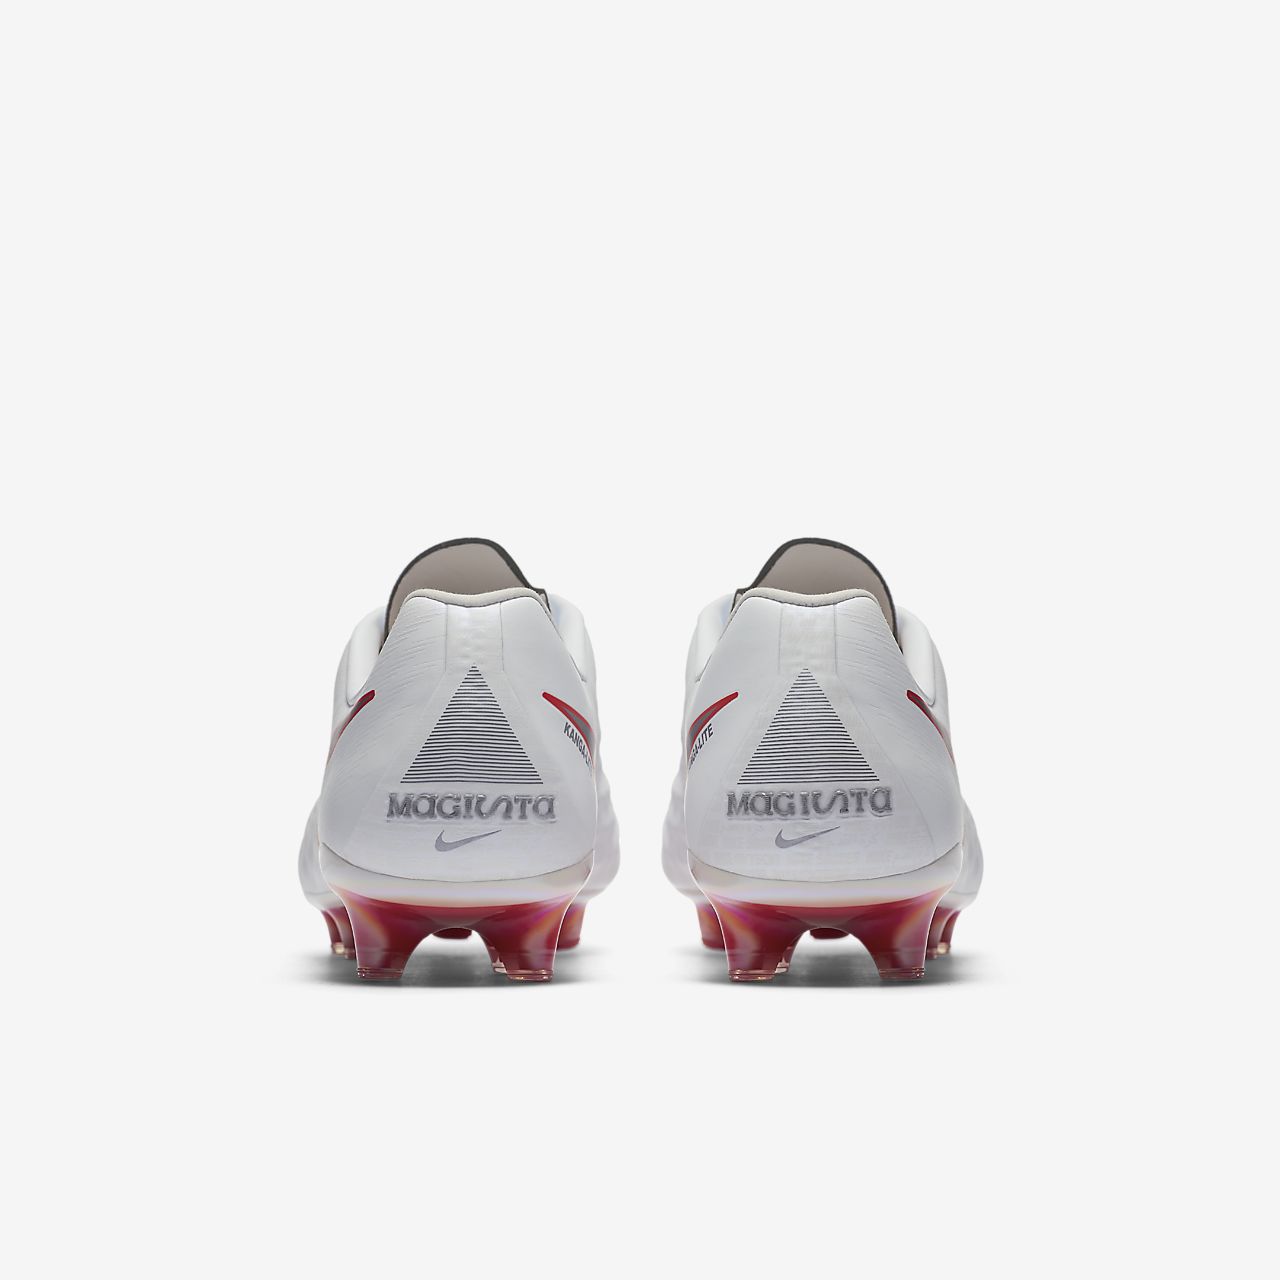 Nike Magista Obra II FG Soccers Football Shoes ACC Dark